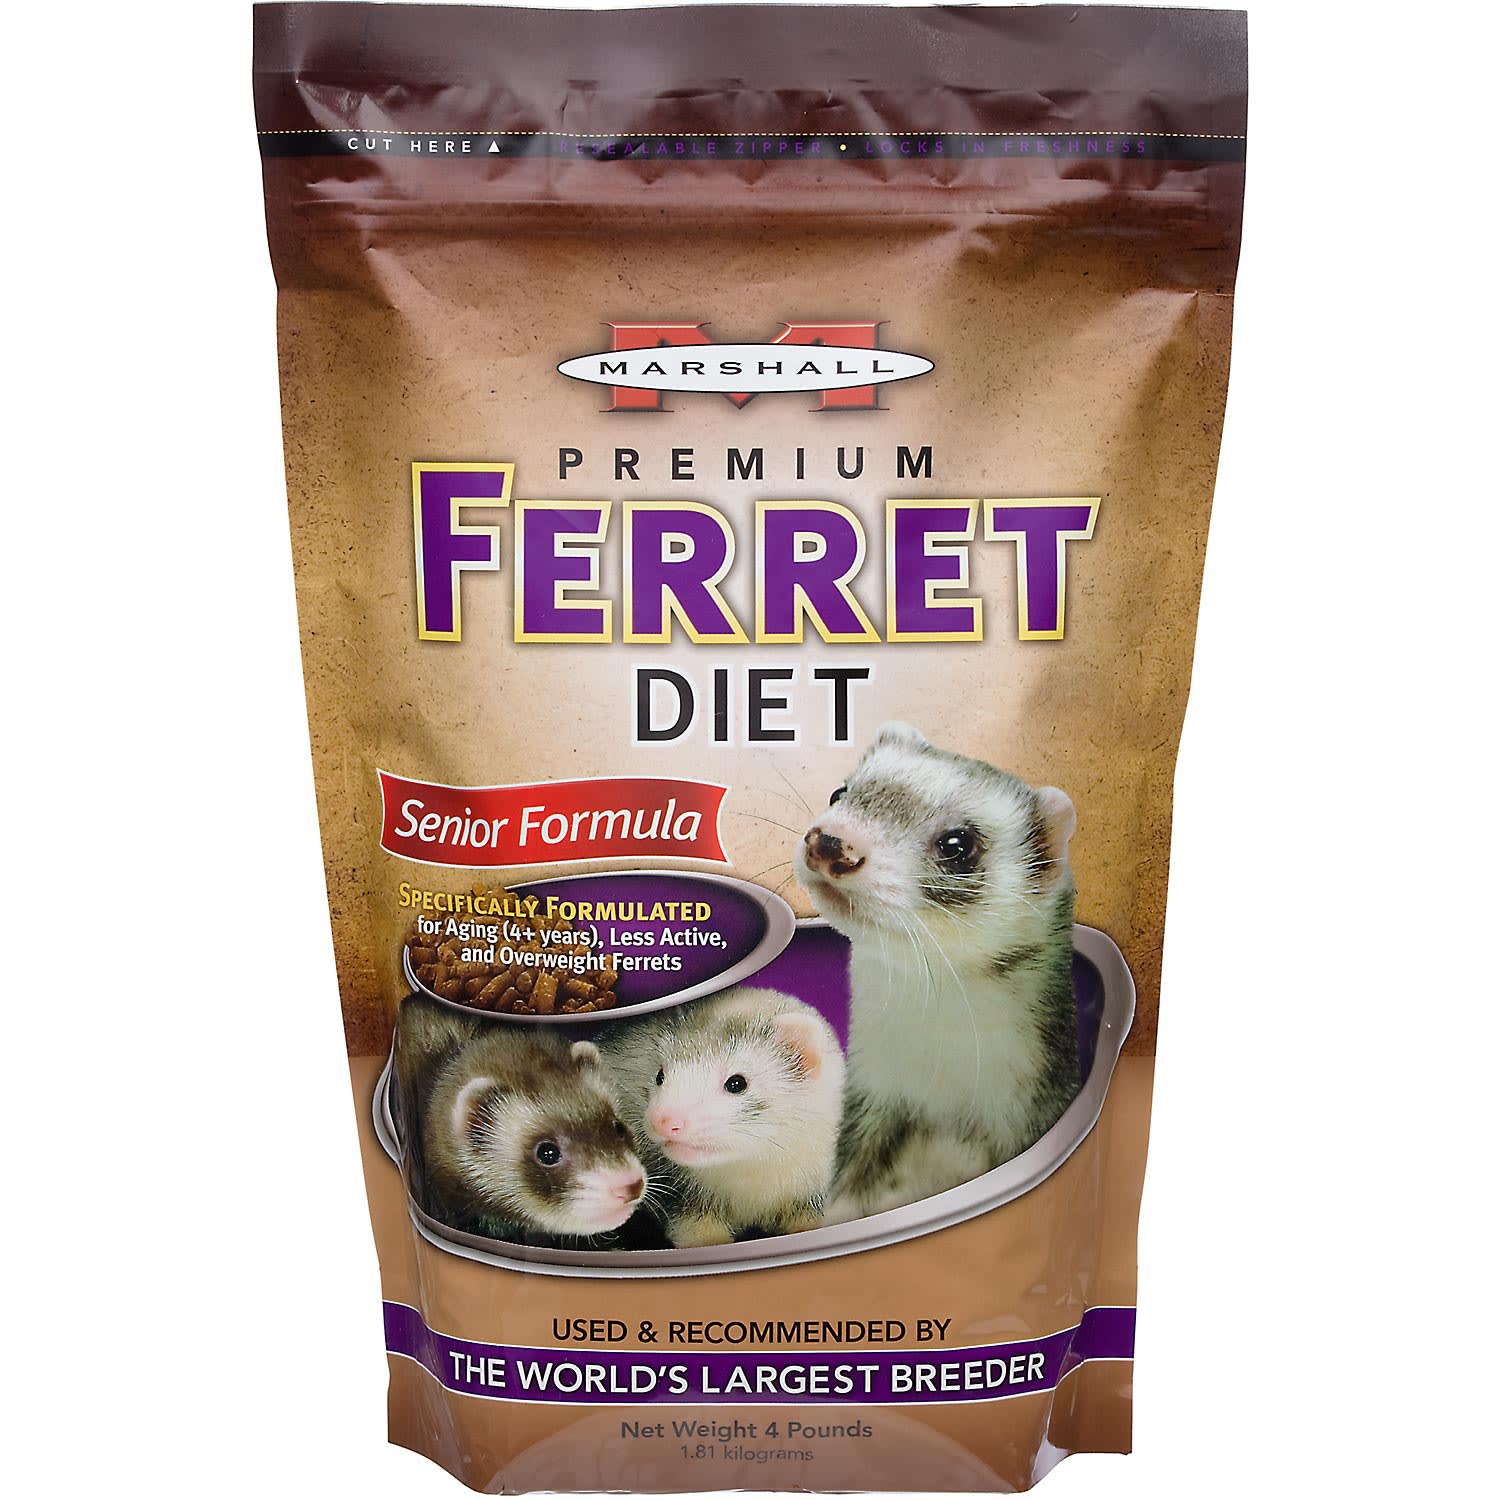 UPC 766501002591 product image for Marshall Pet Products Premium Ferret Diet Senior Formula, 4 LBS | upcitemdb.com